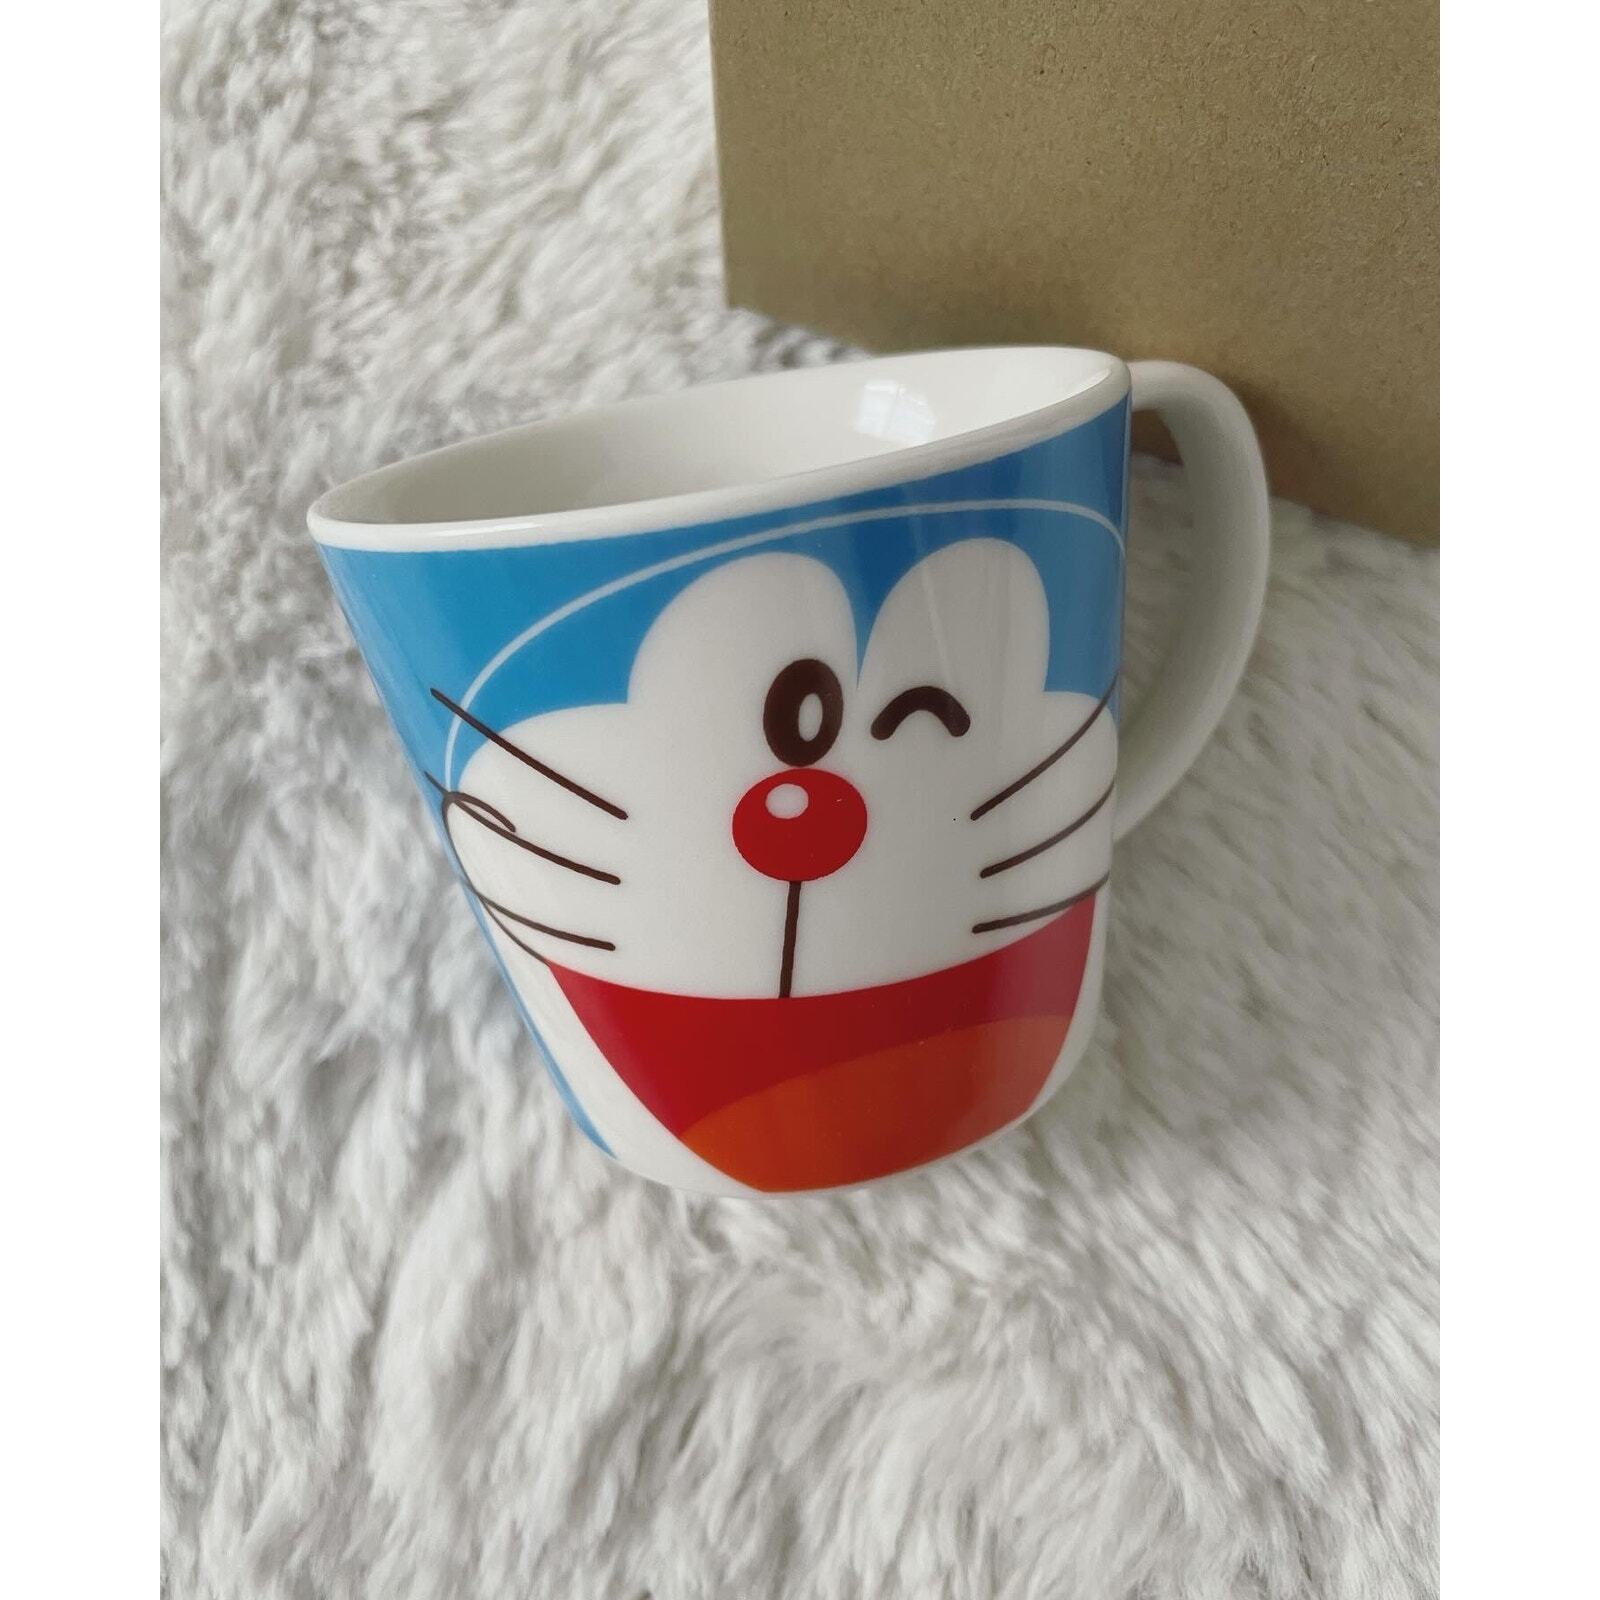 Brand new in box - Doraemon mug